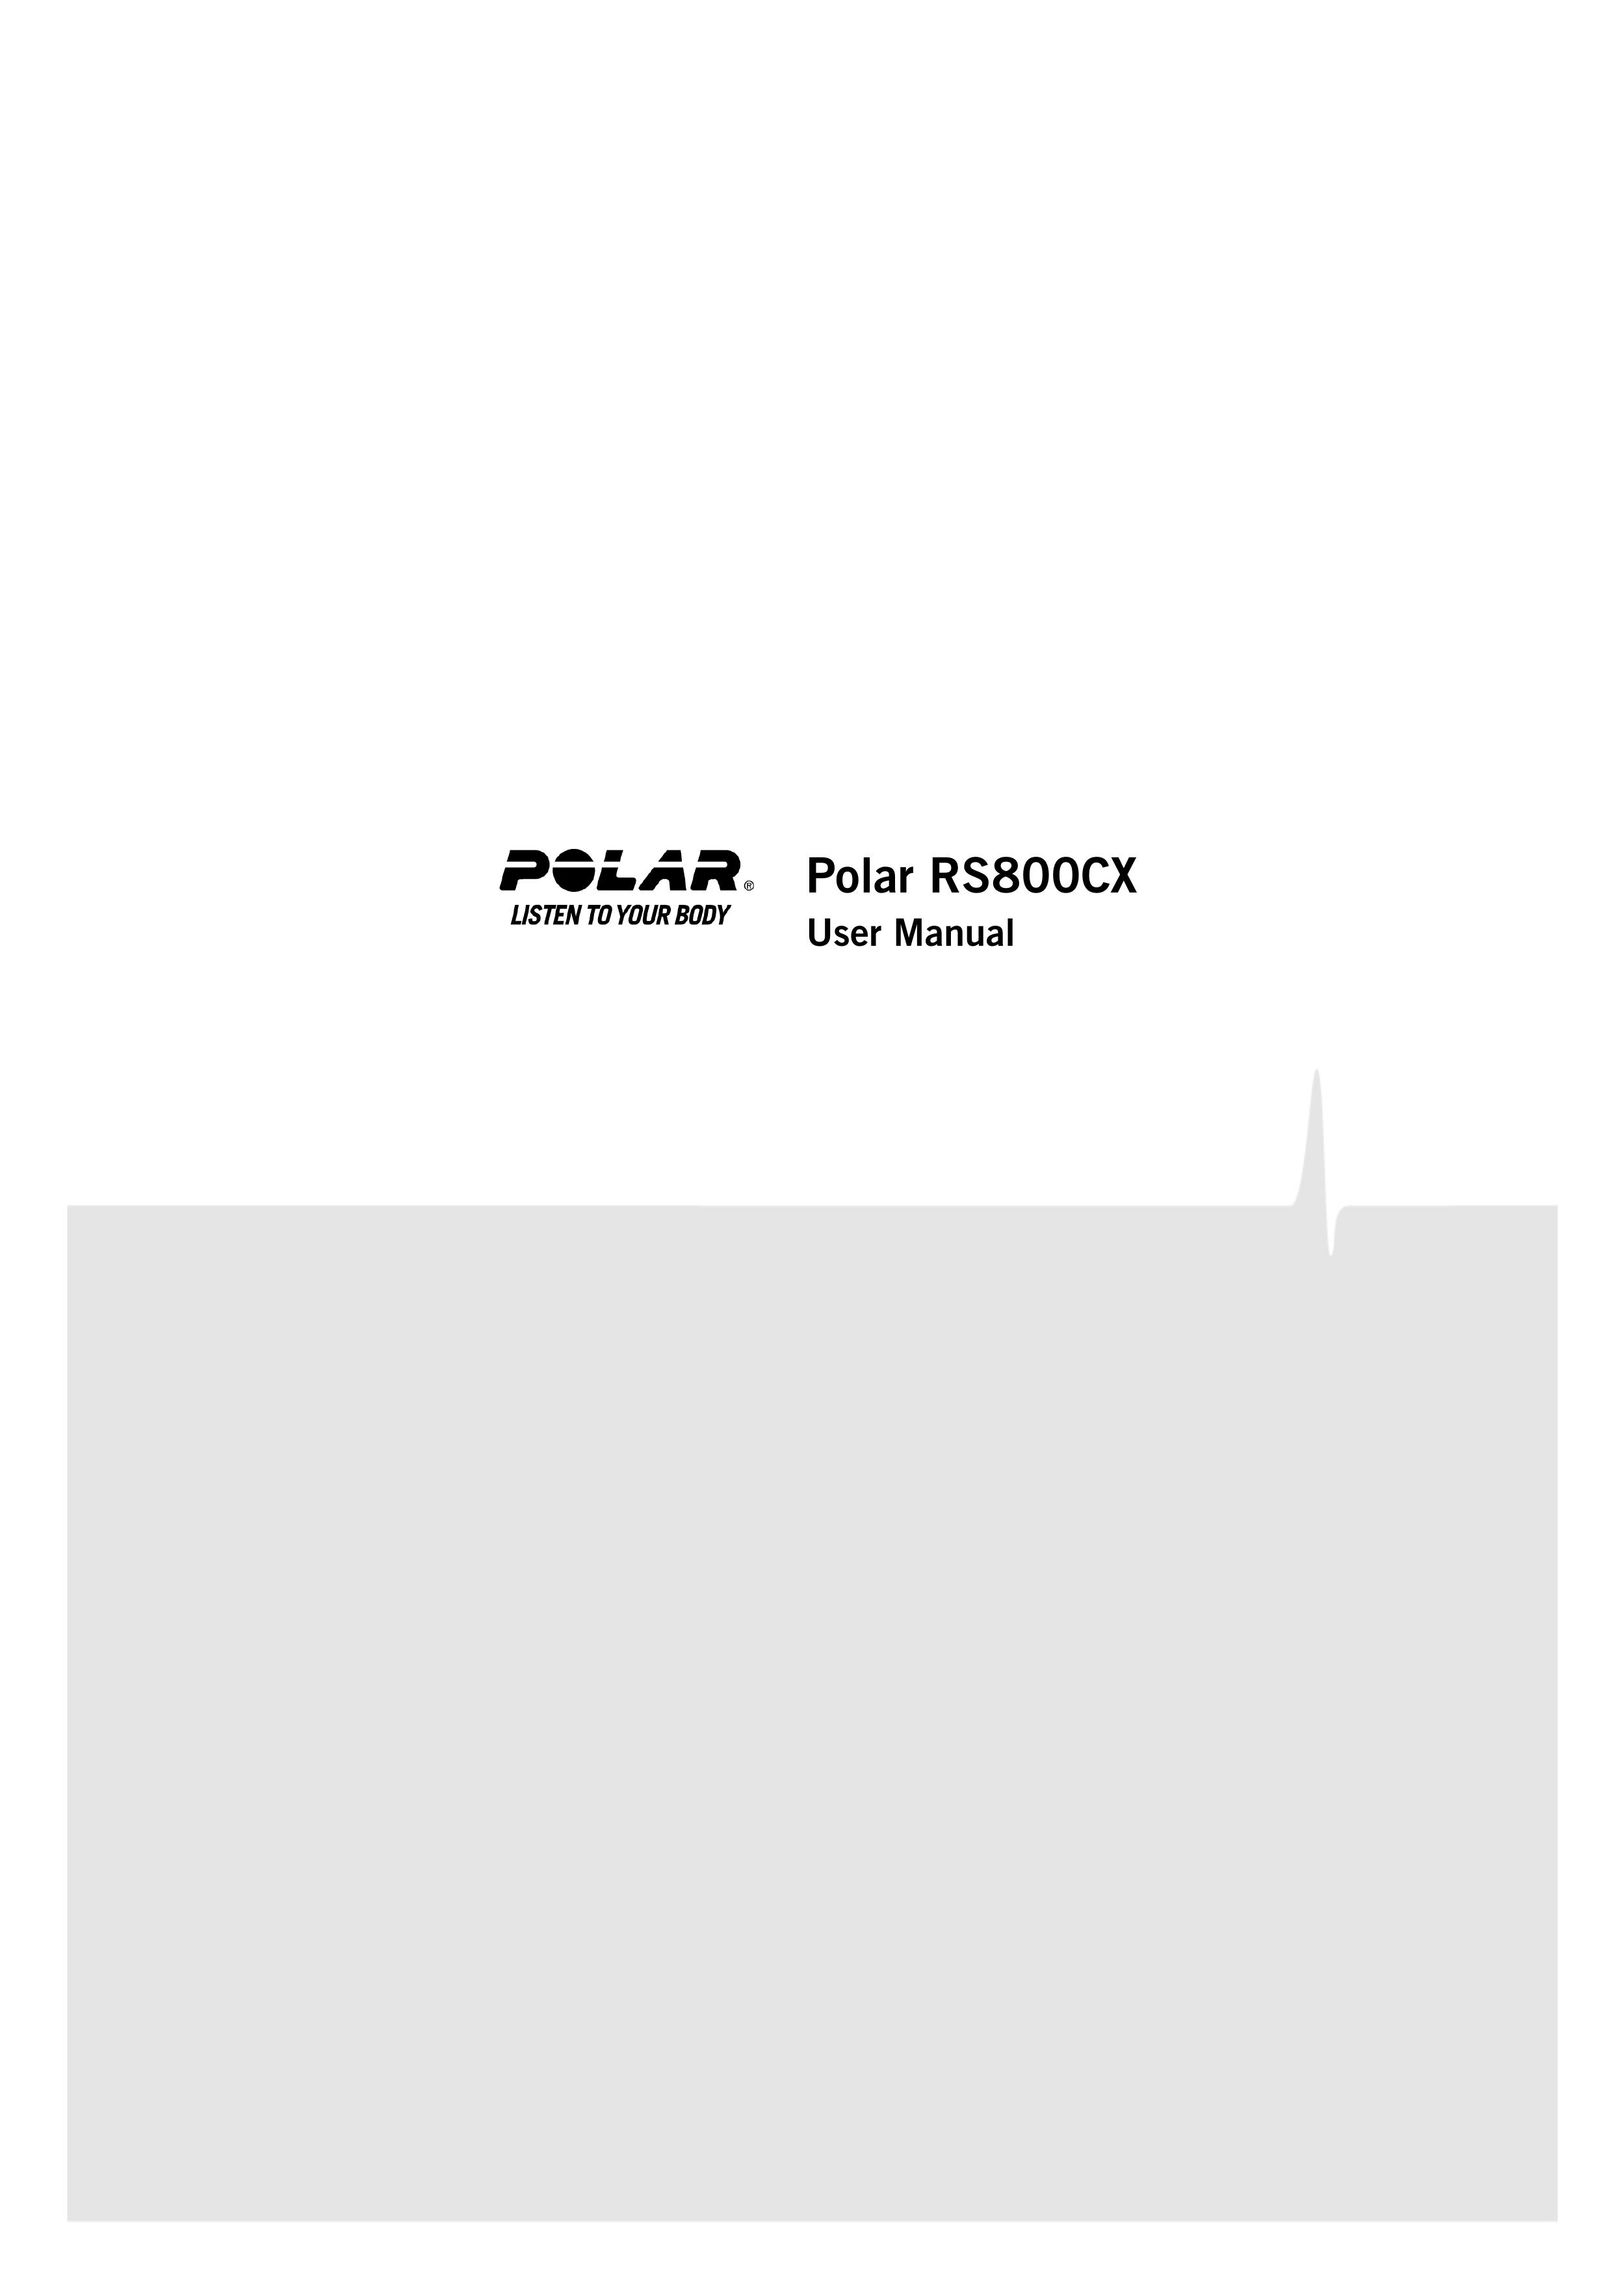 Polar RS800CX Watch User Manual